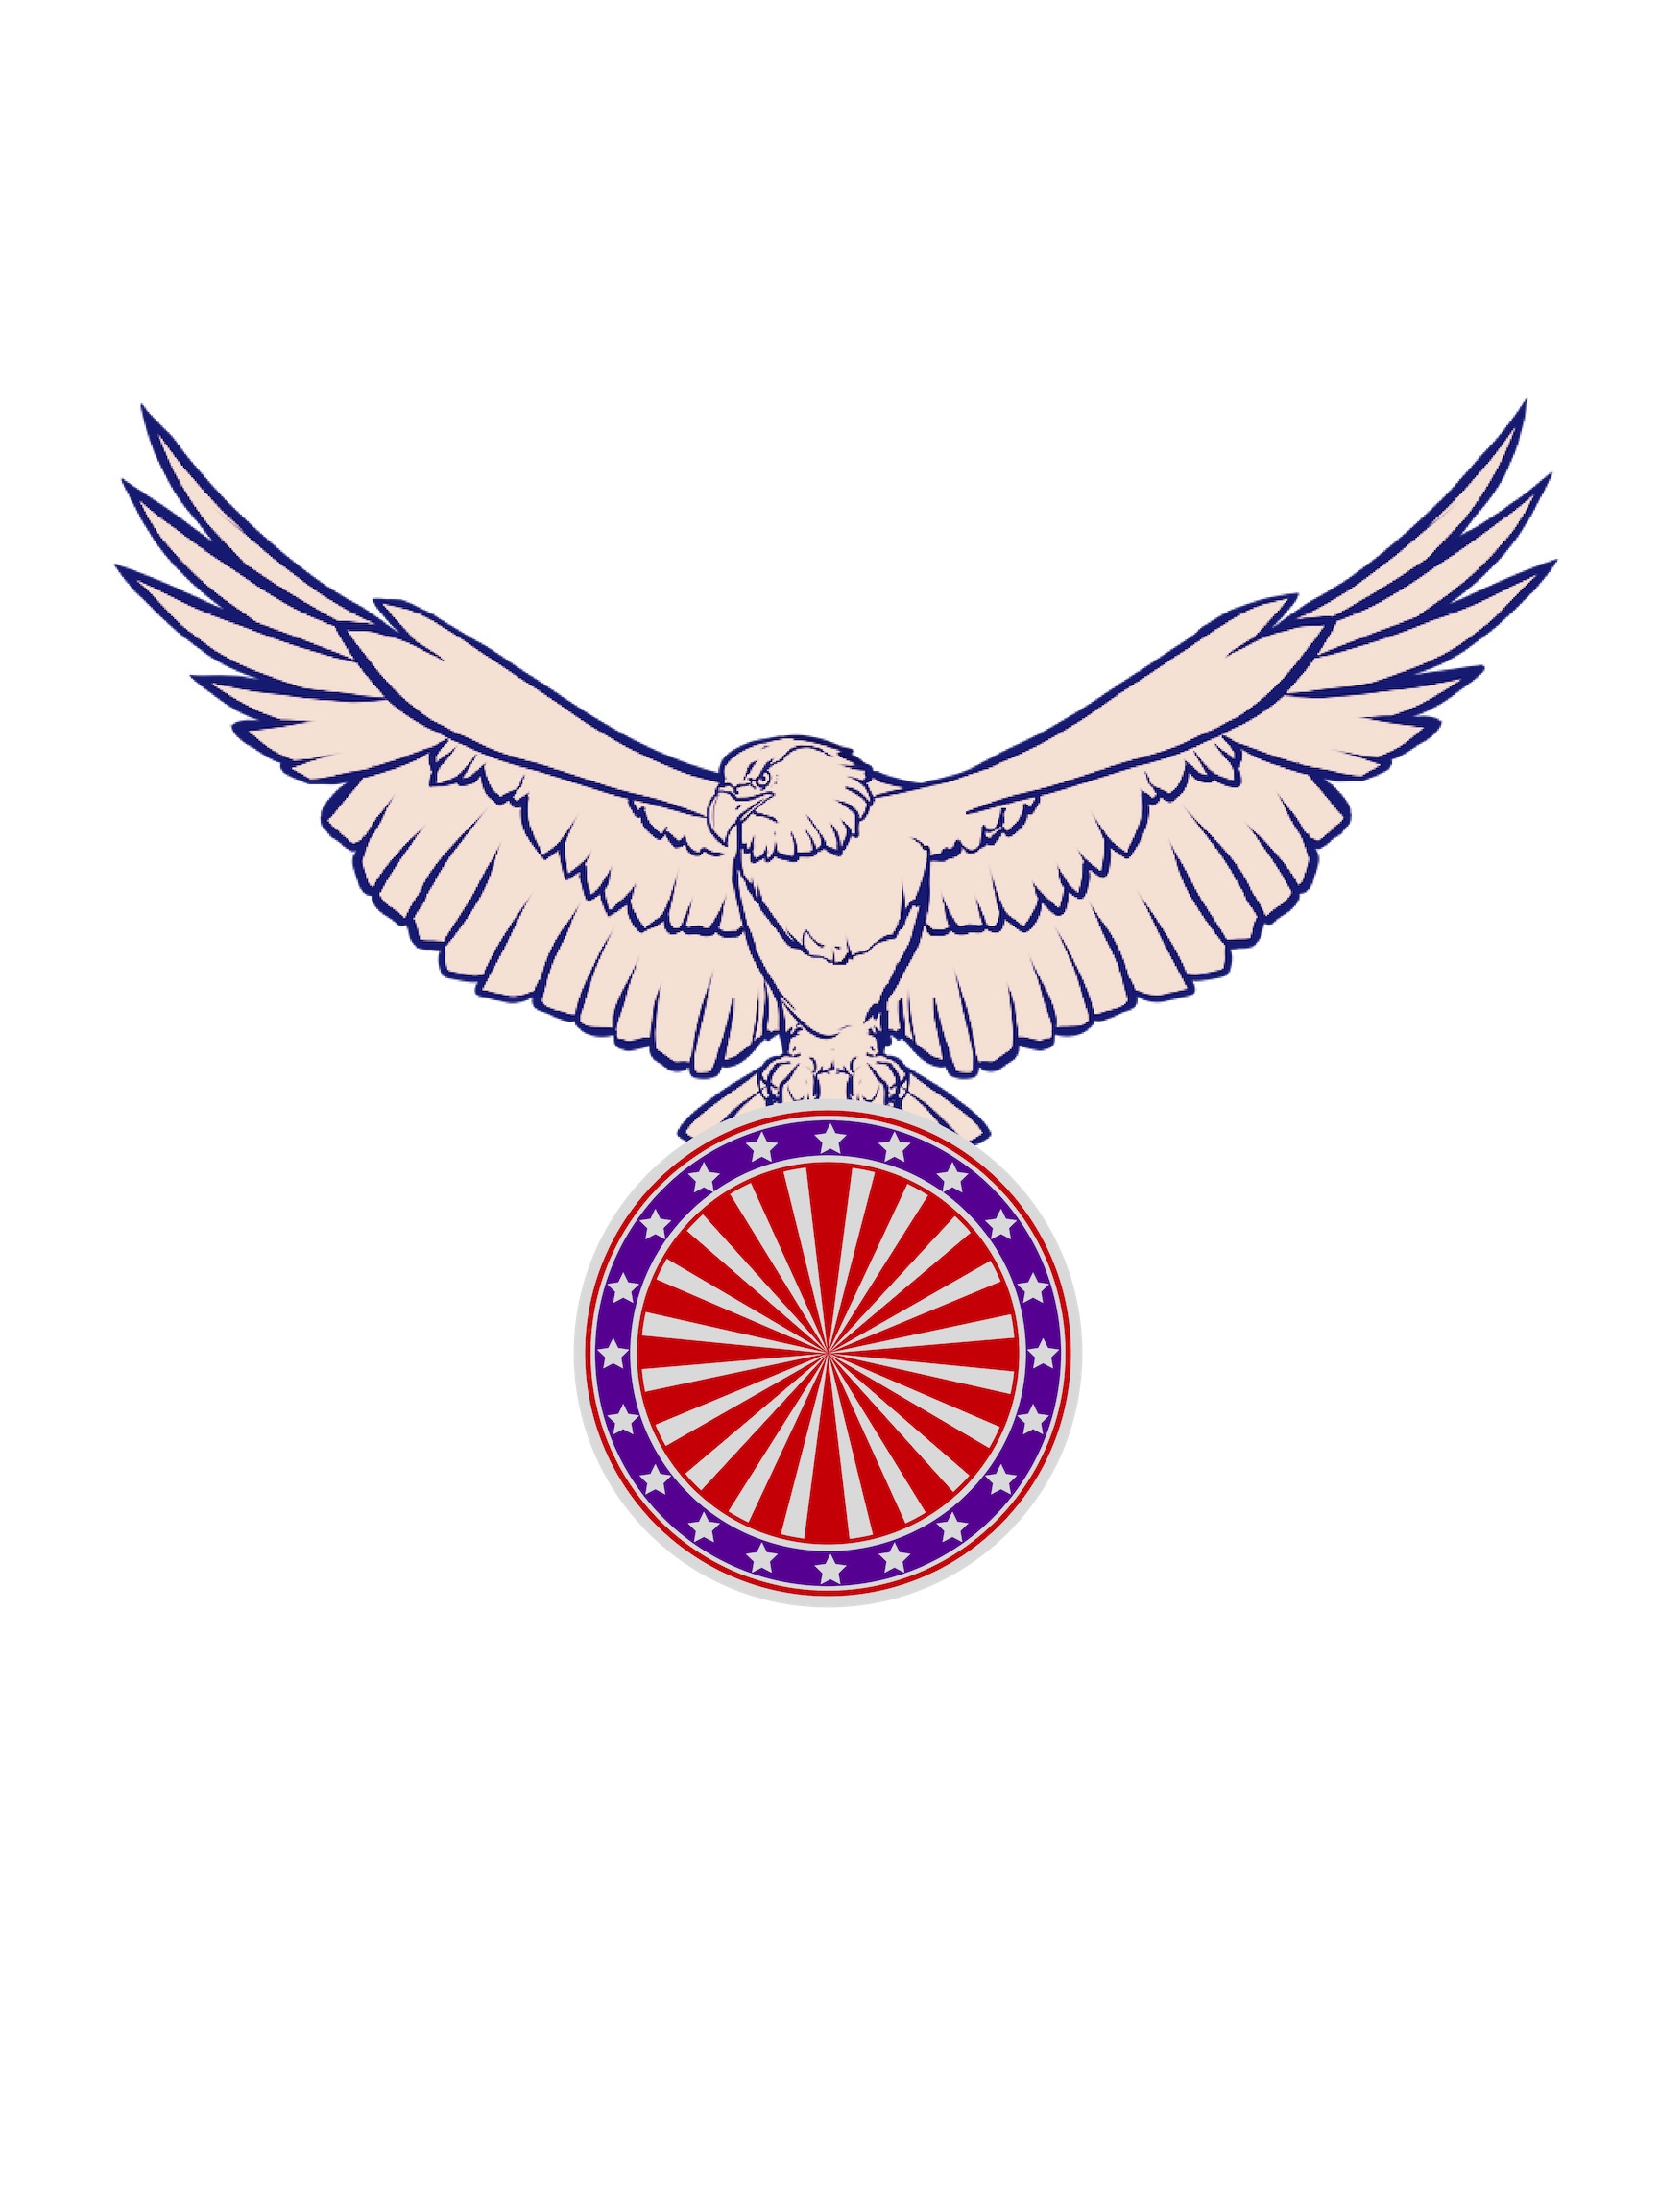 Patriotic Peoples Party logo